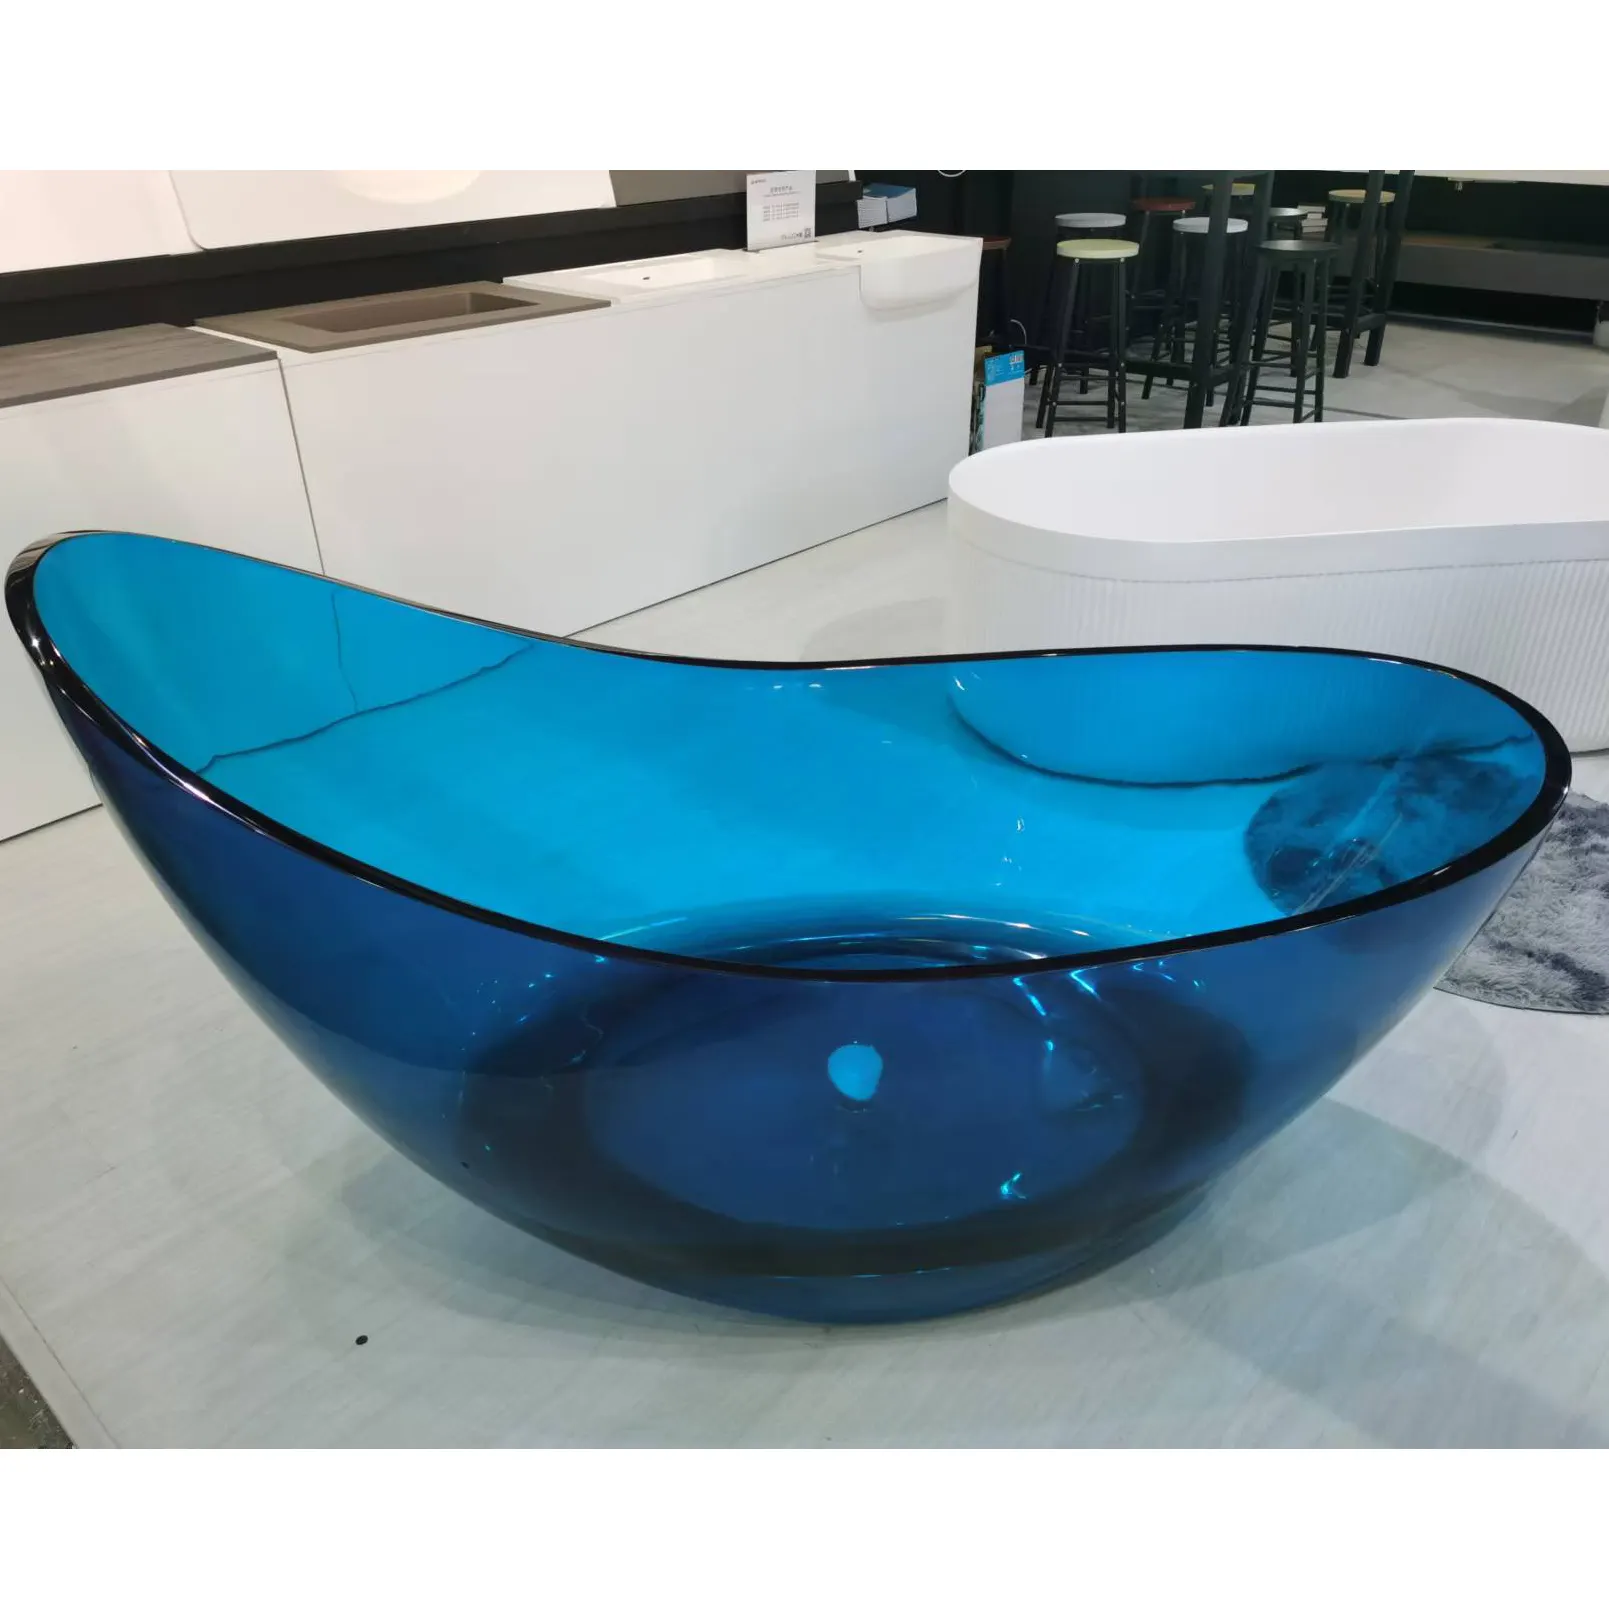 Colore blu trasparente in resina Freestanding vasche da bagno in poliestere trasparente vasca da bagno per adulti